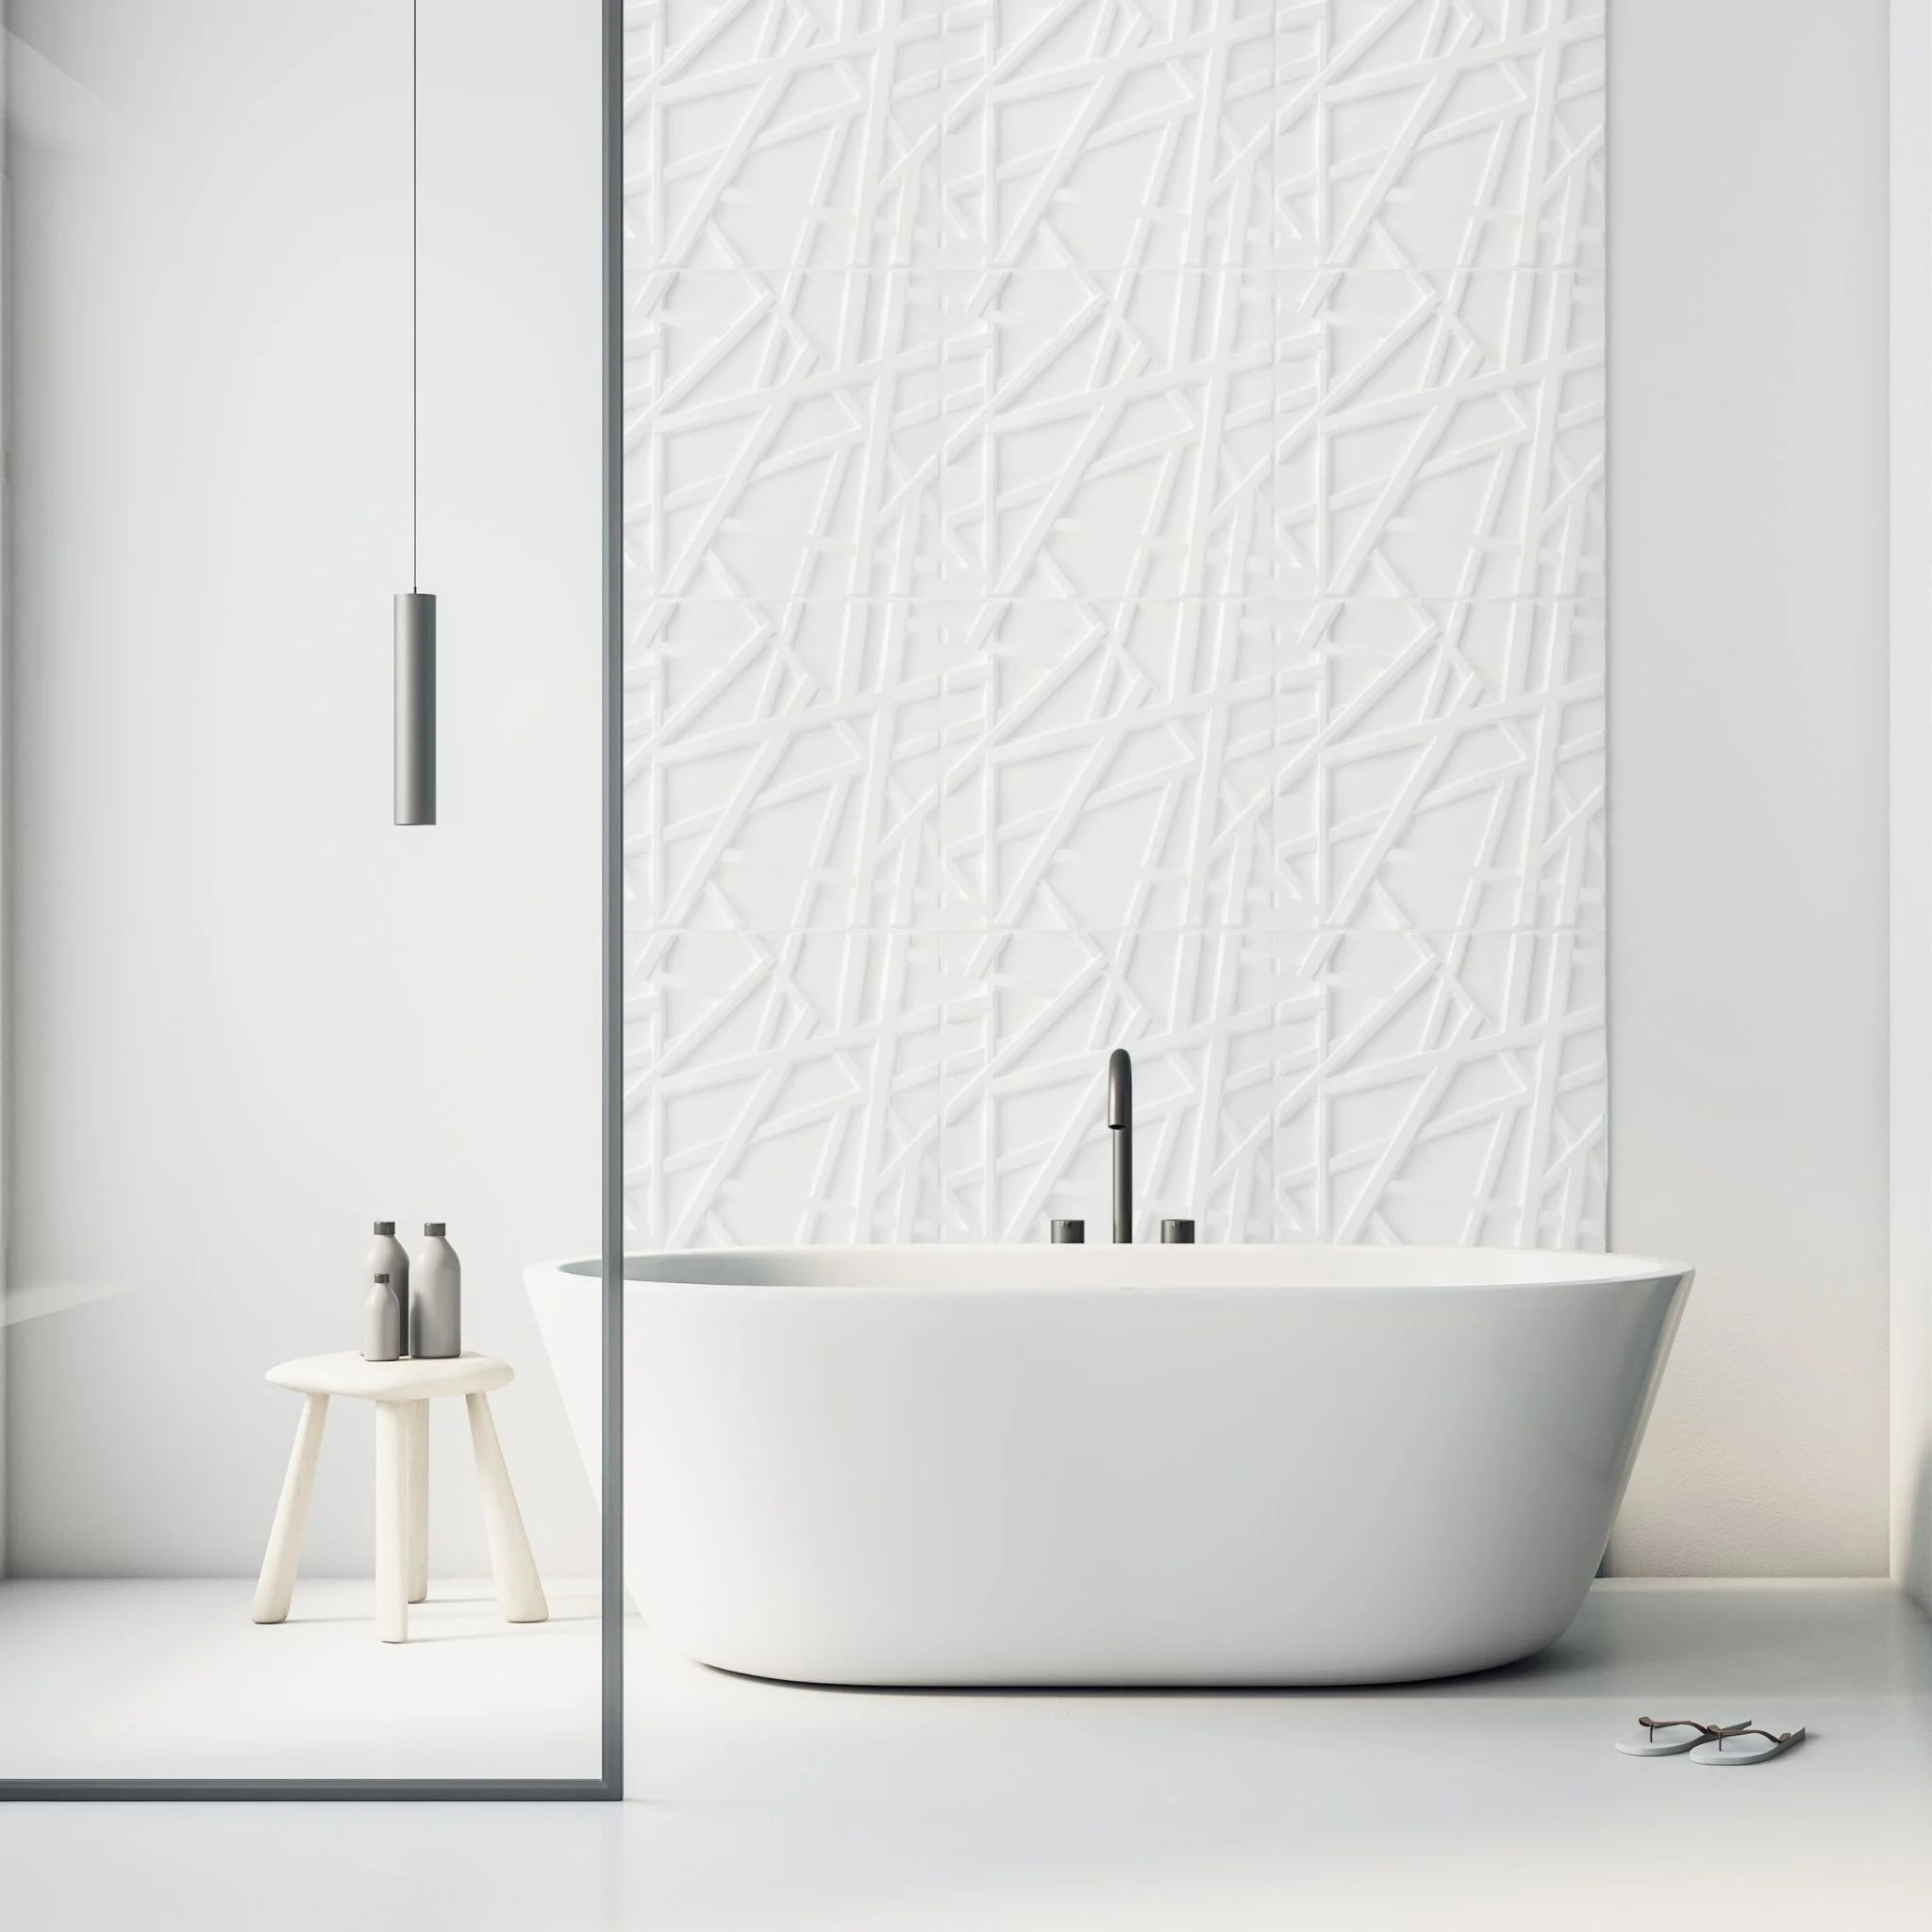 White PVC wall panel with crisscross design in modern bathroom